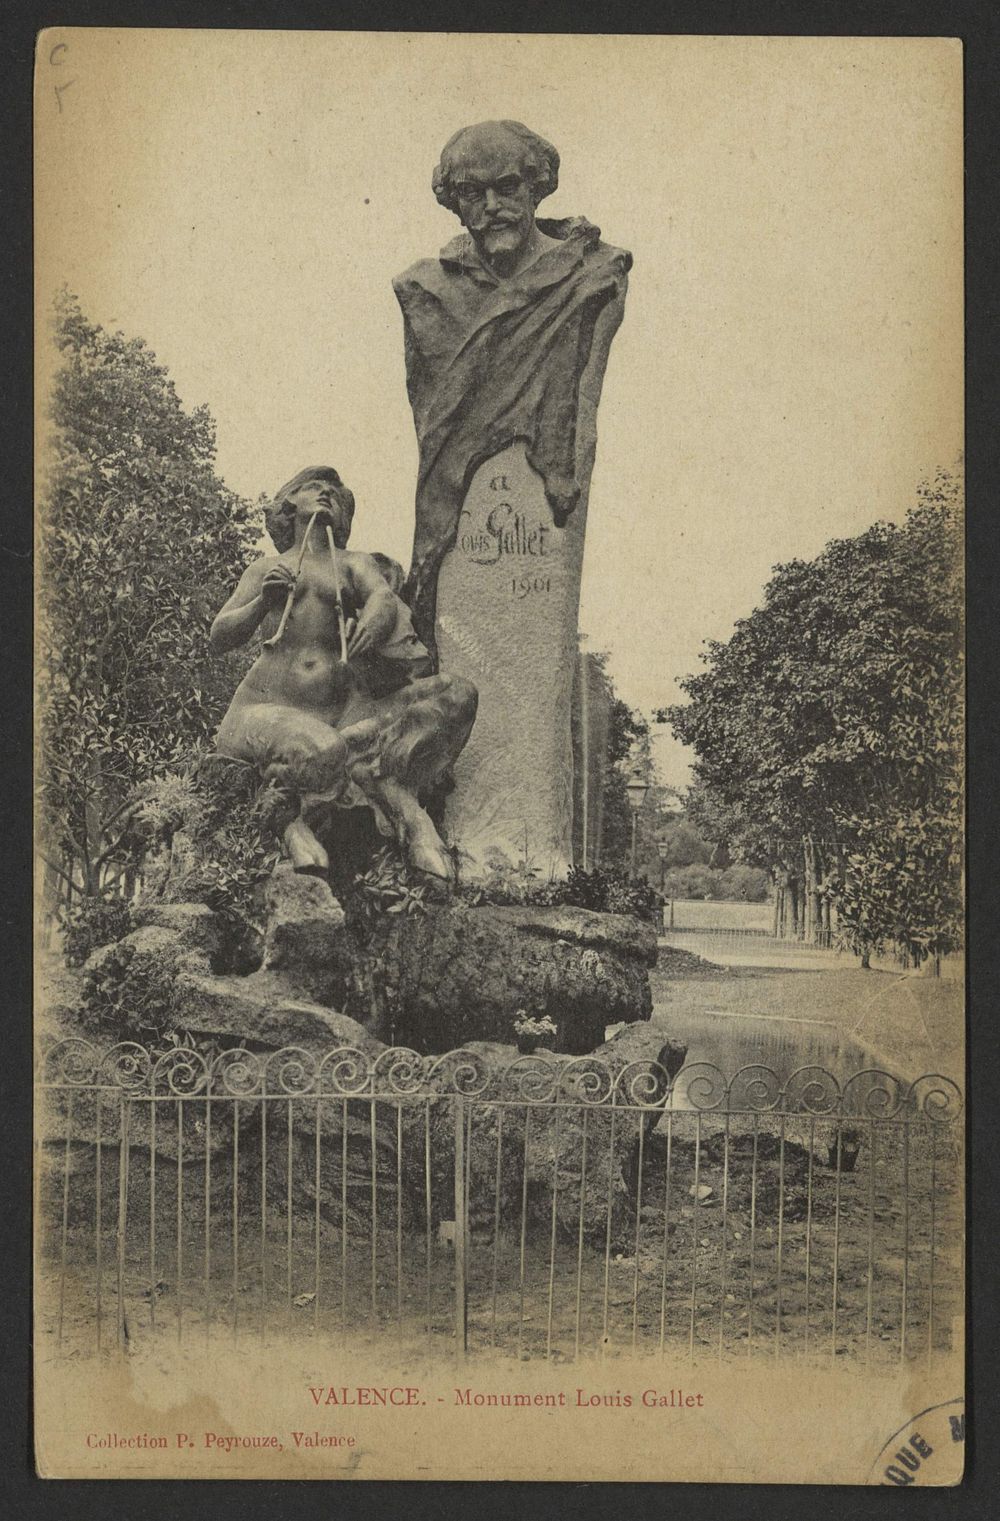 Valence - Monument Louis Gallet